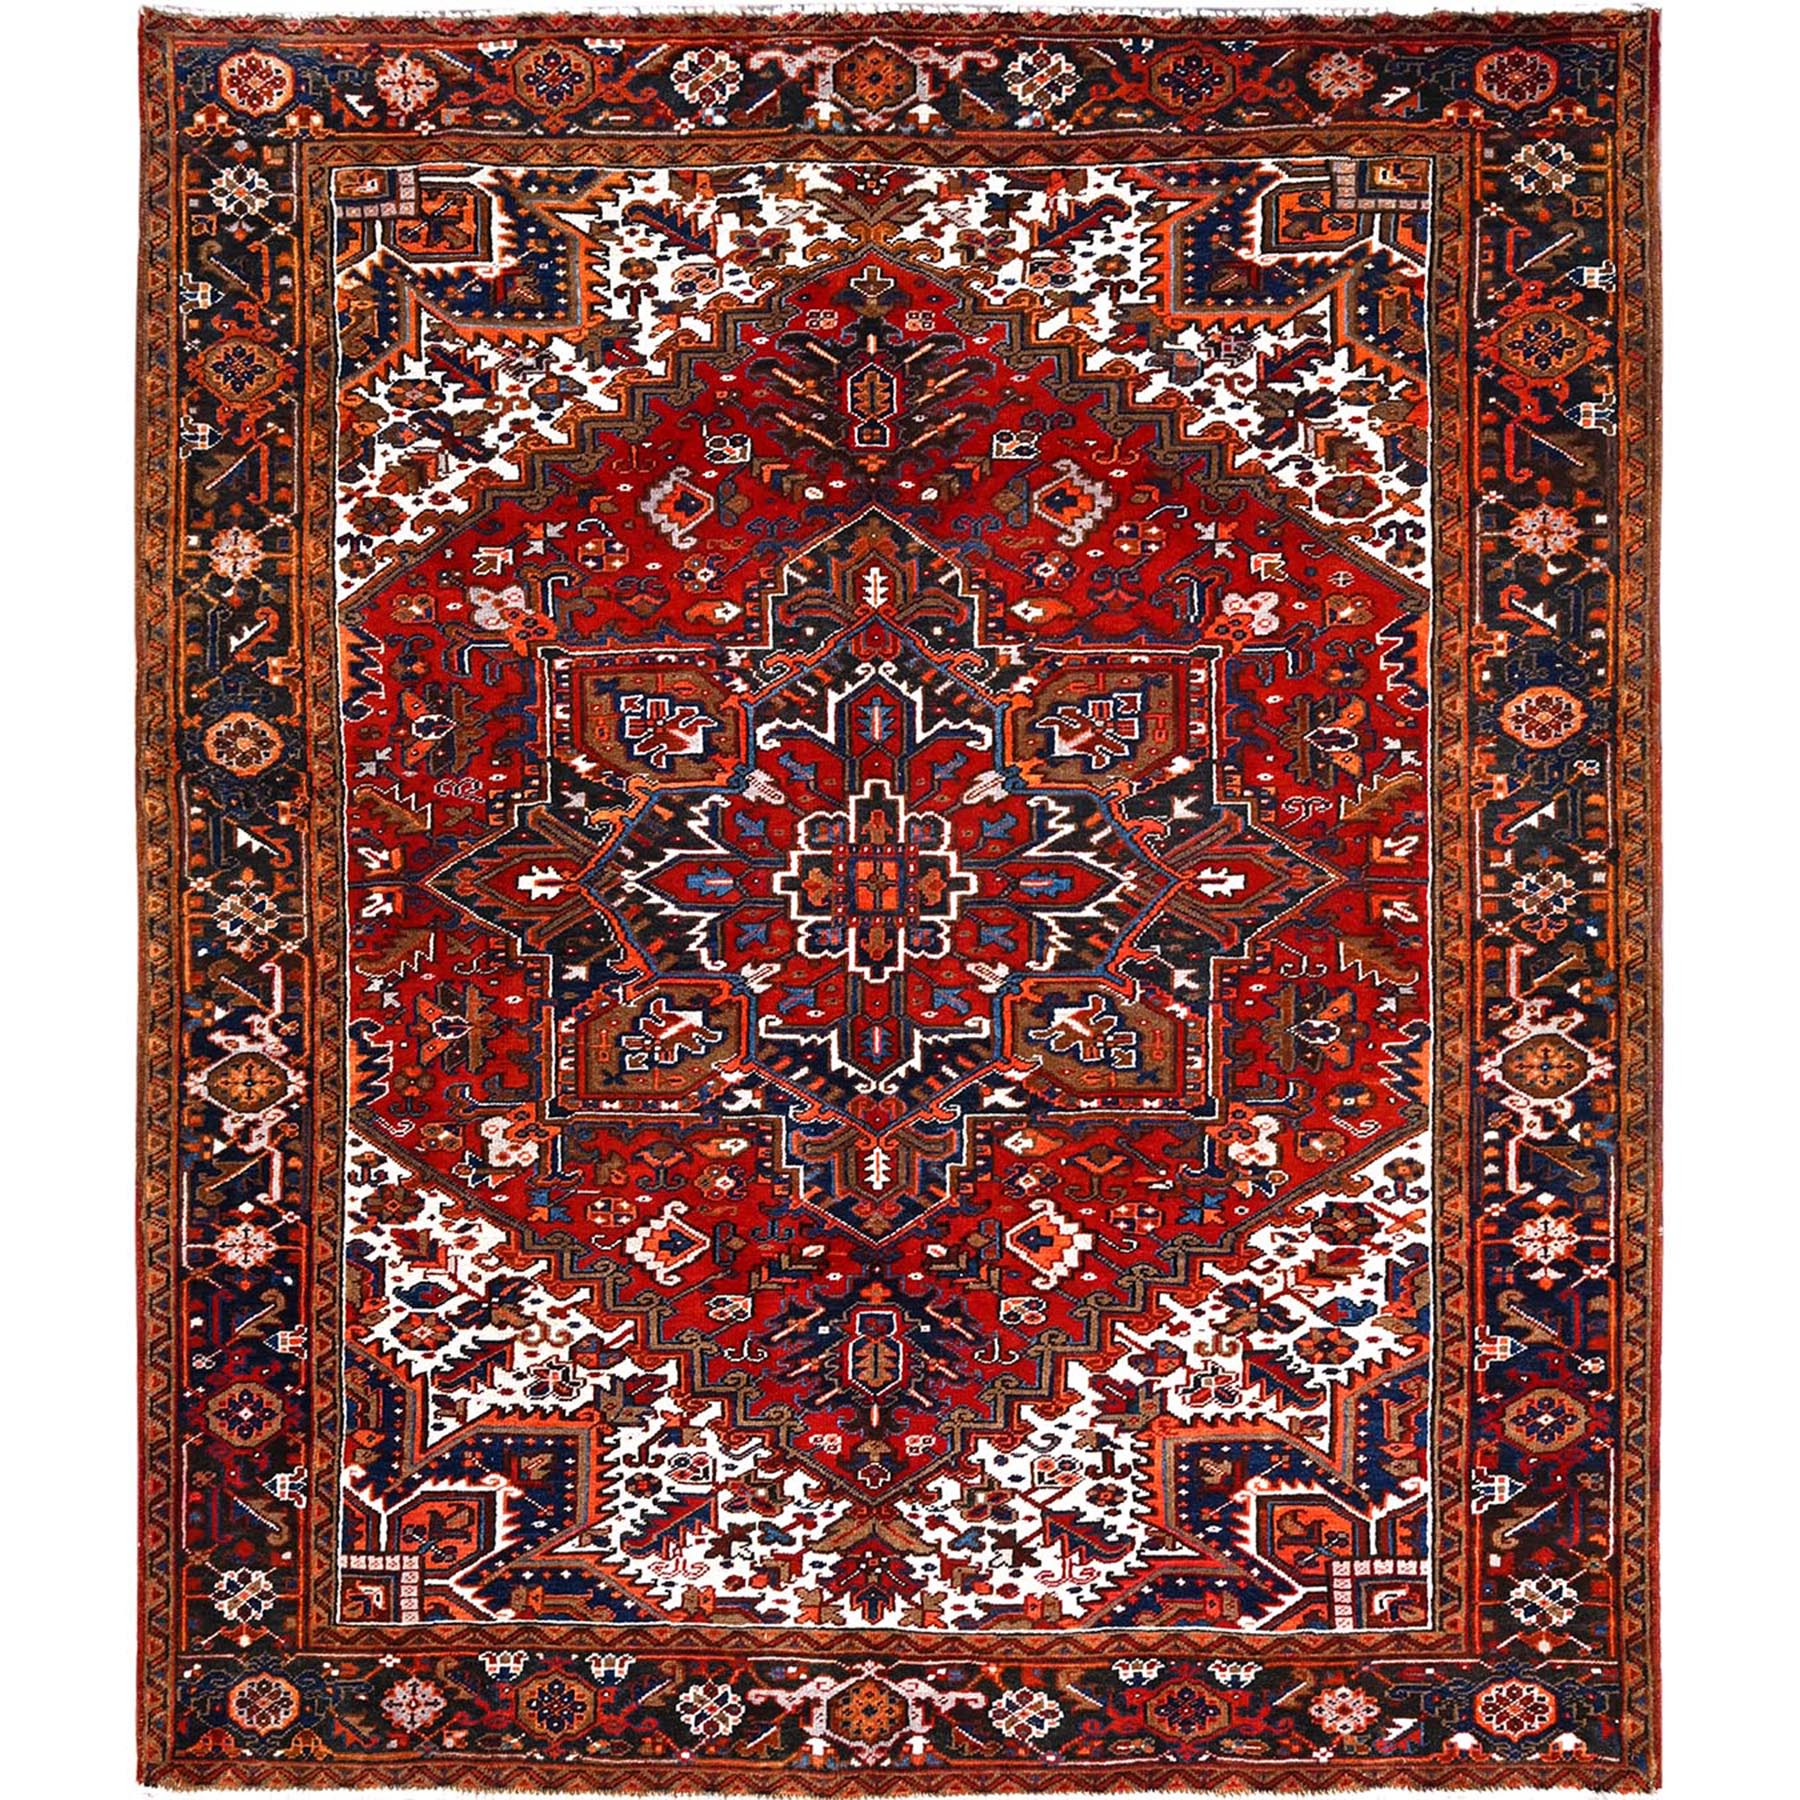 7'5"x8'10" Chili Red, Good Condition, Rustic Feel, Worn Wool, Hand Woven, Vintage Persian Heriz, Village Motif, Oriental Rug 